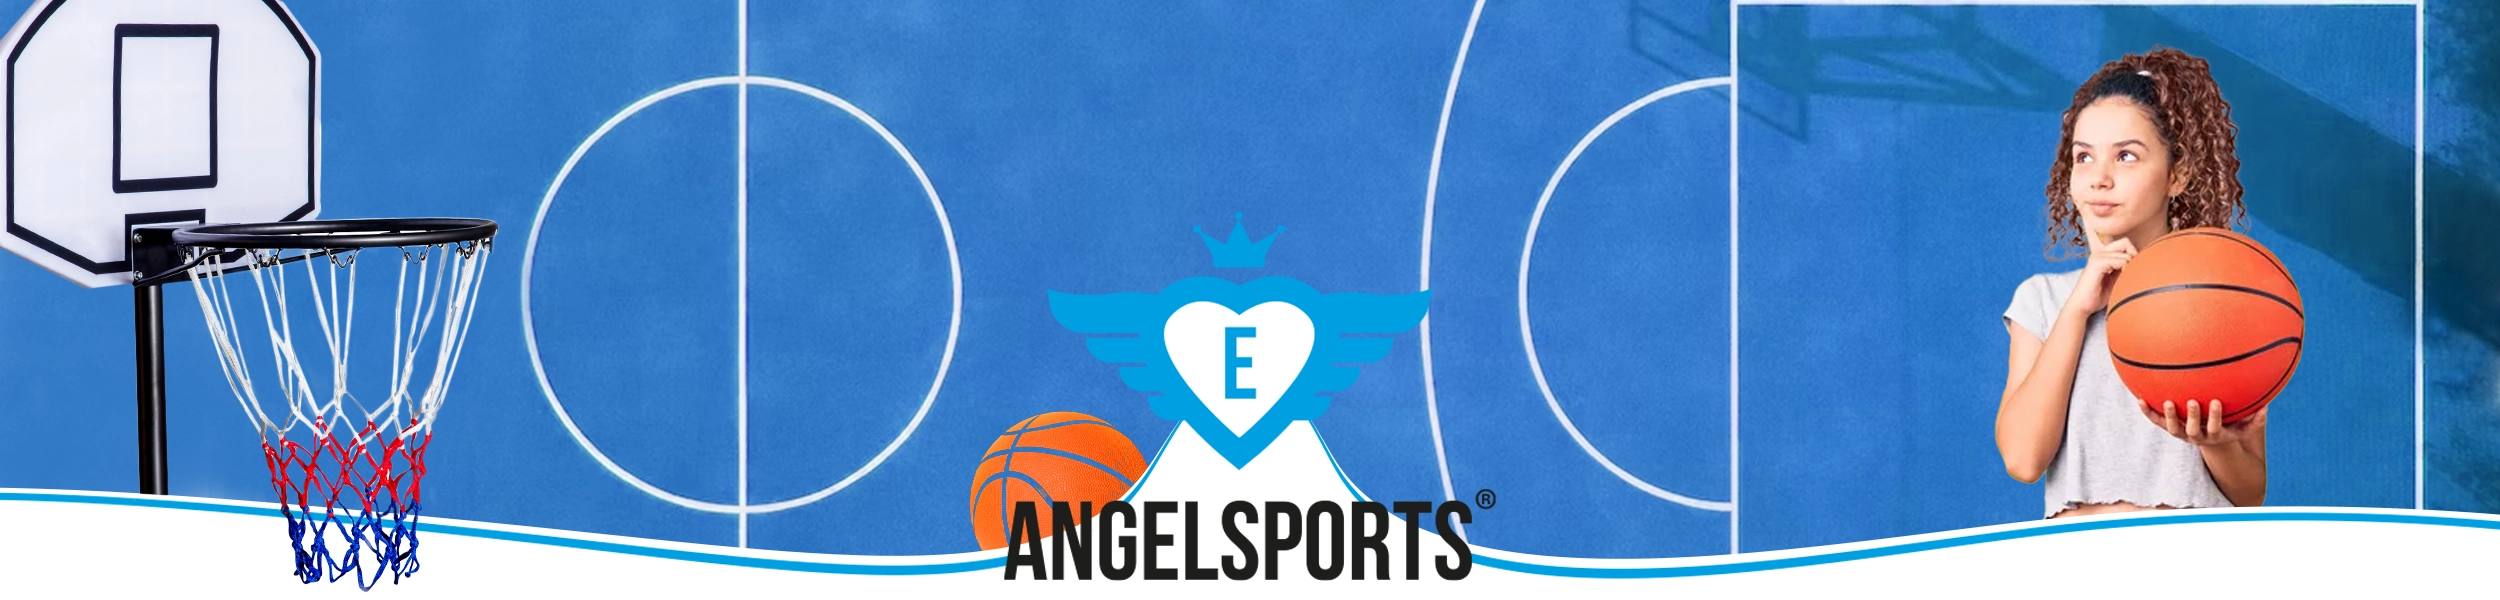 angel sports basketball marke kinder